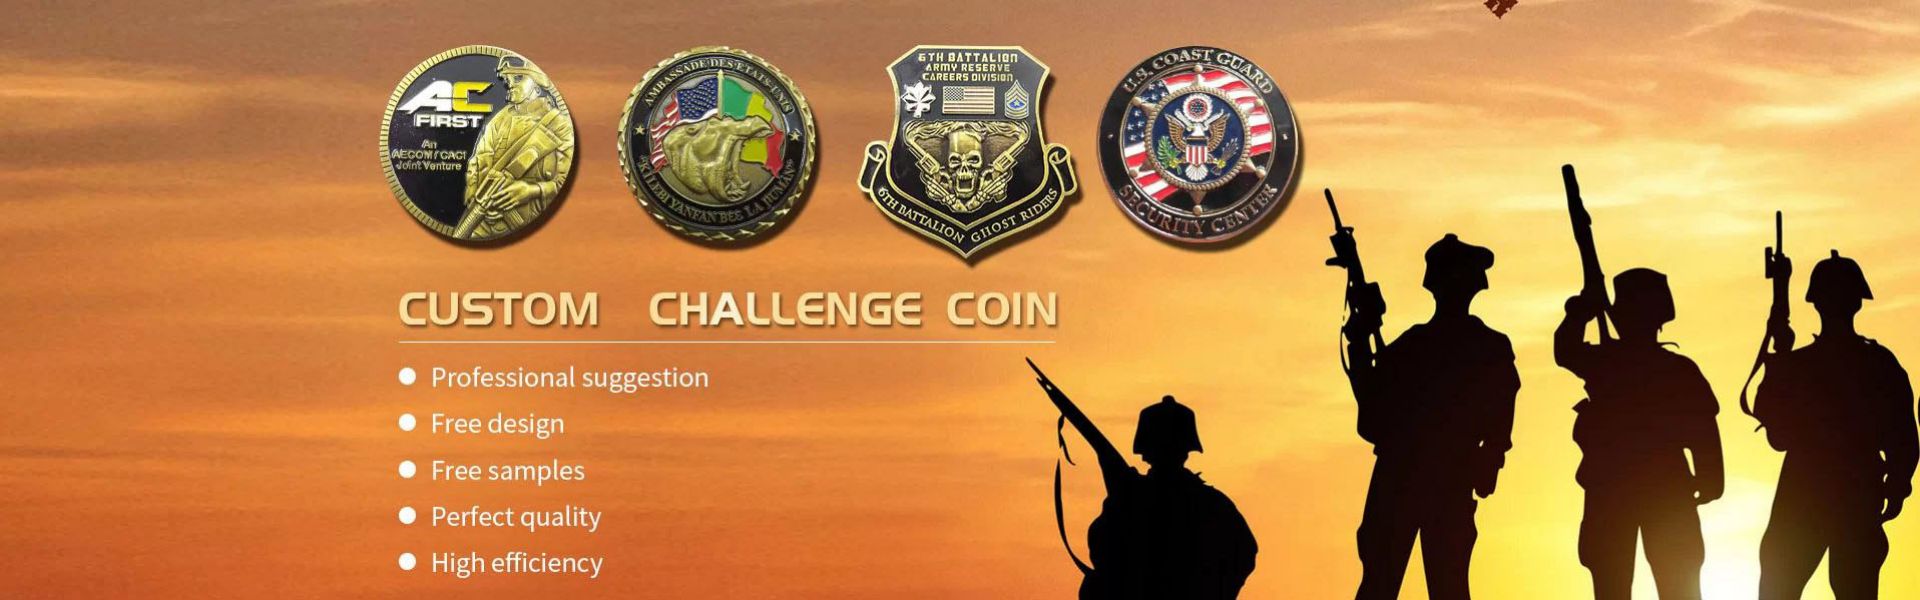 Custom Challenge Coins Military Coins Zinc Alloy Coins Souvenir Collection Use